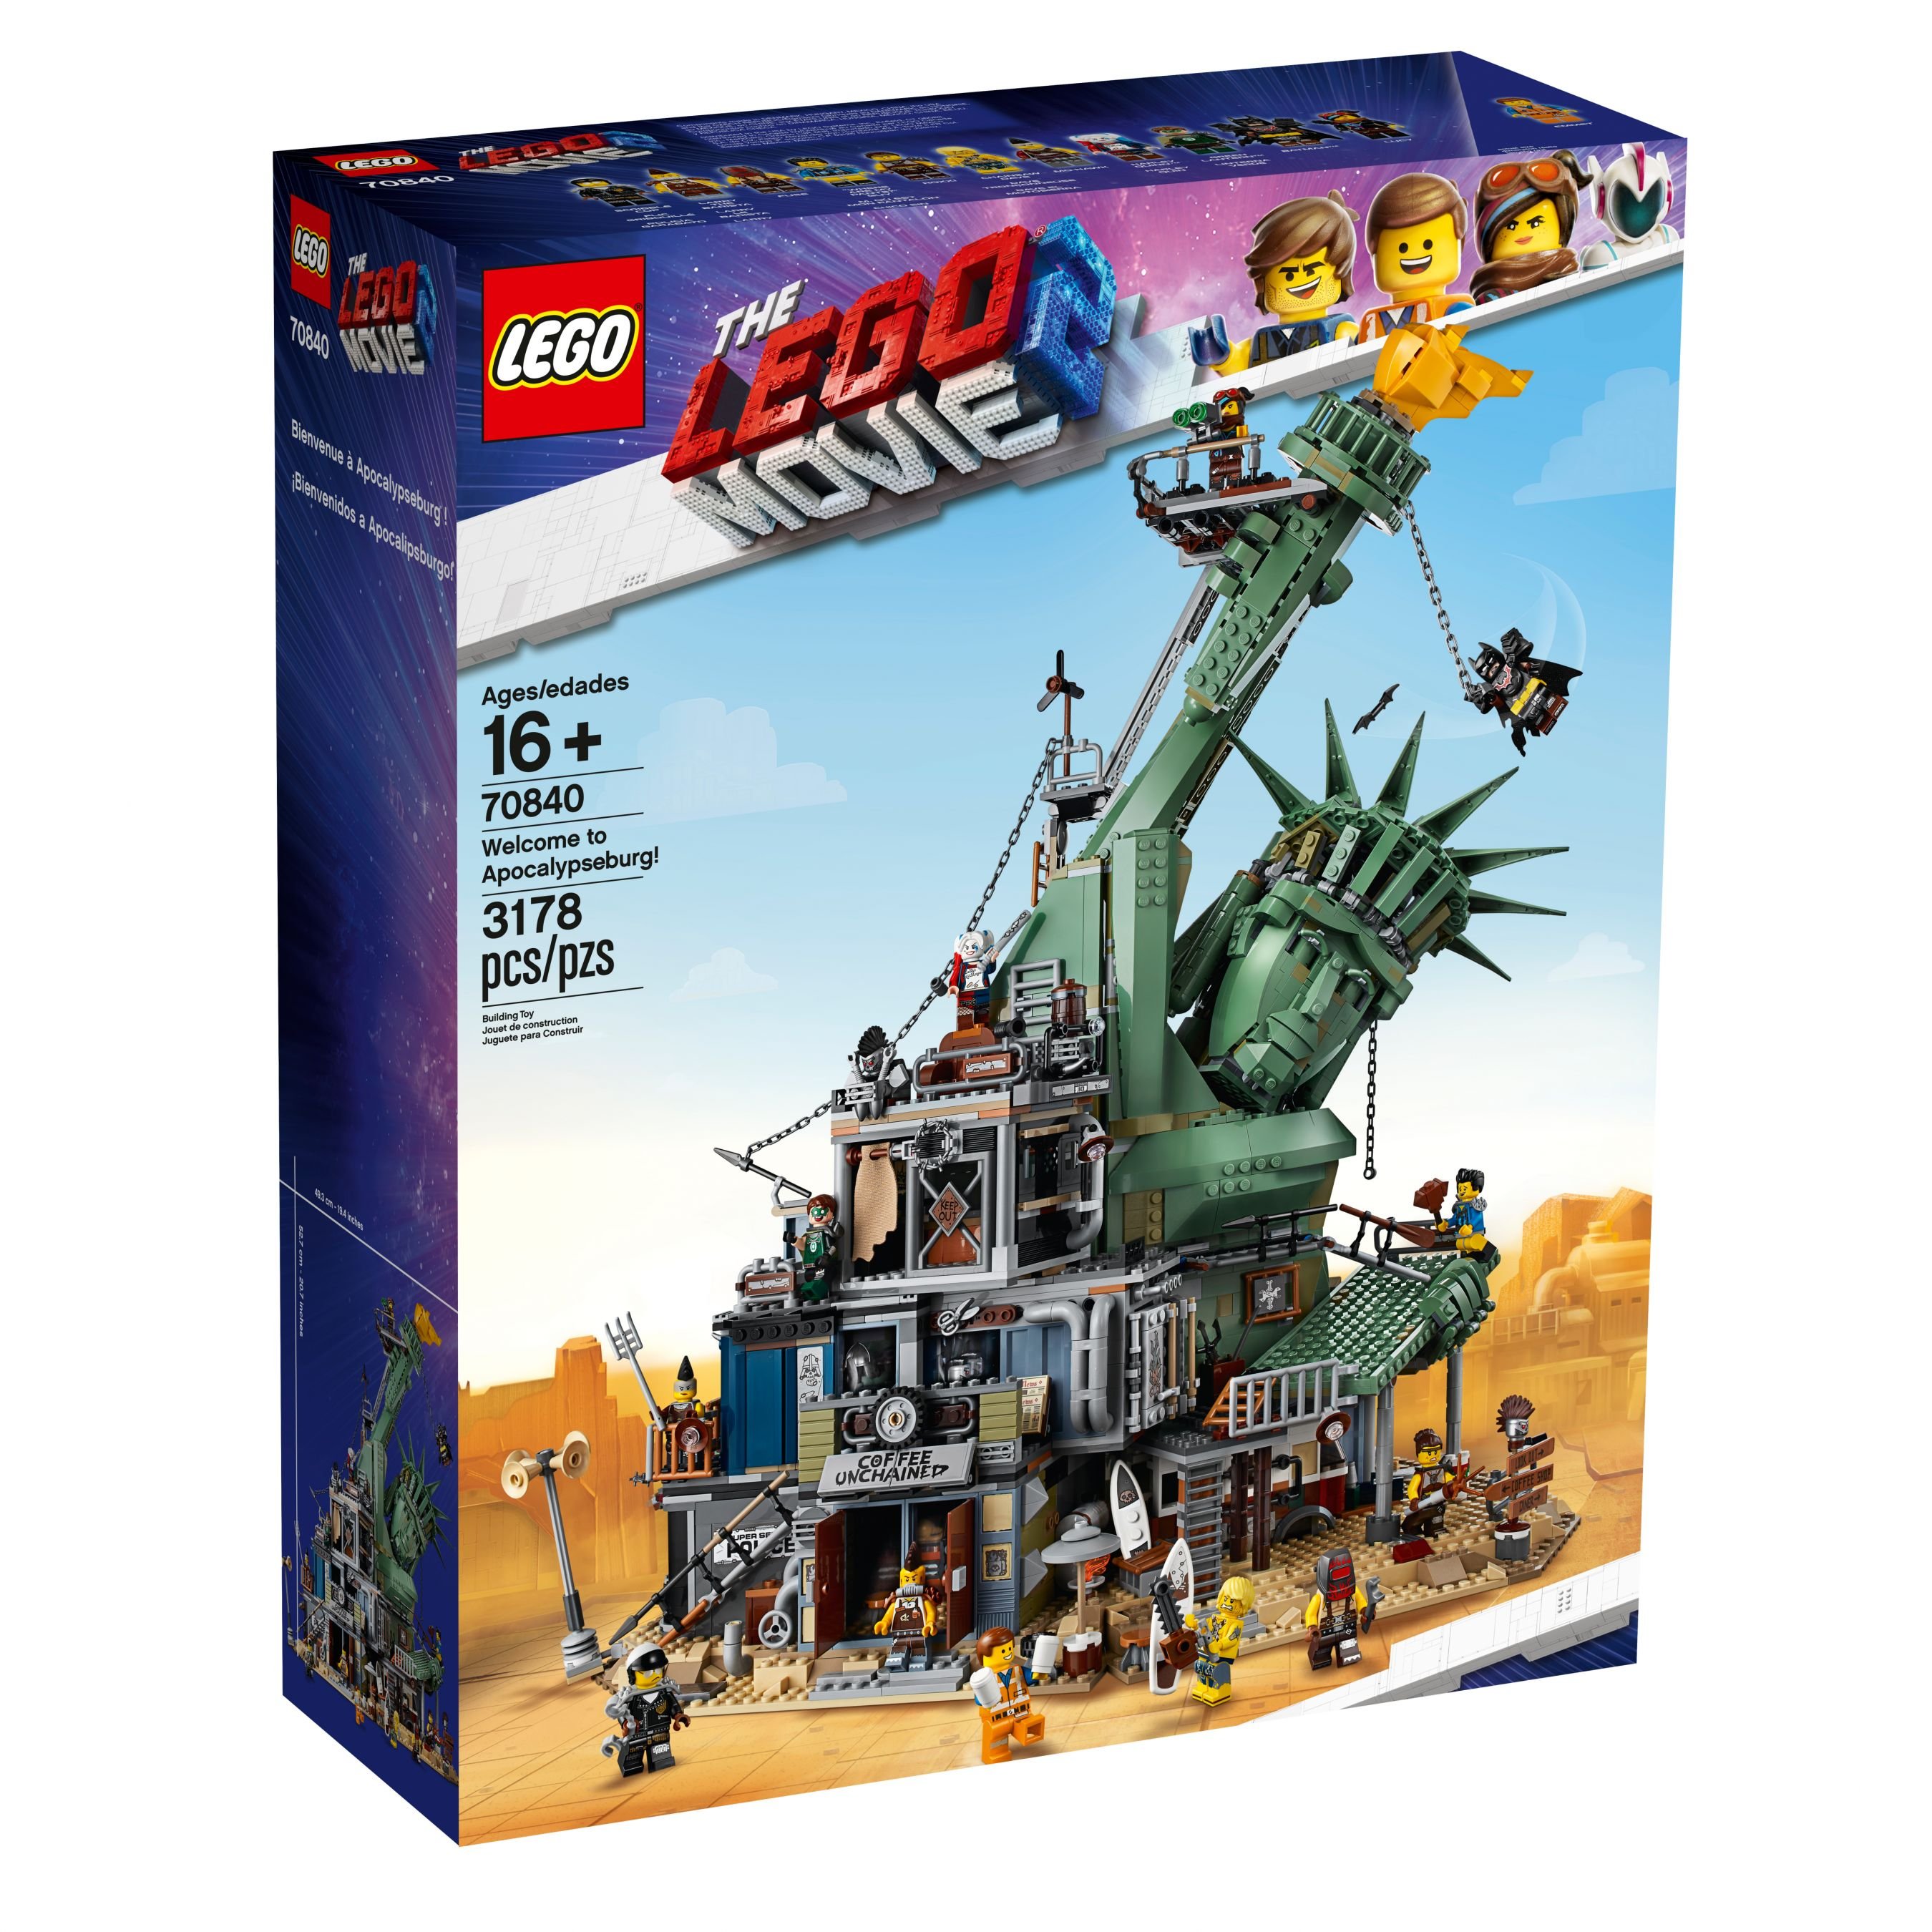 LEGO The LEGO Movie 2 70840 Willkommen in Apokalypstadt! LEGO_70840_alt1.jpg